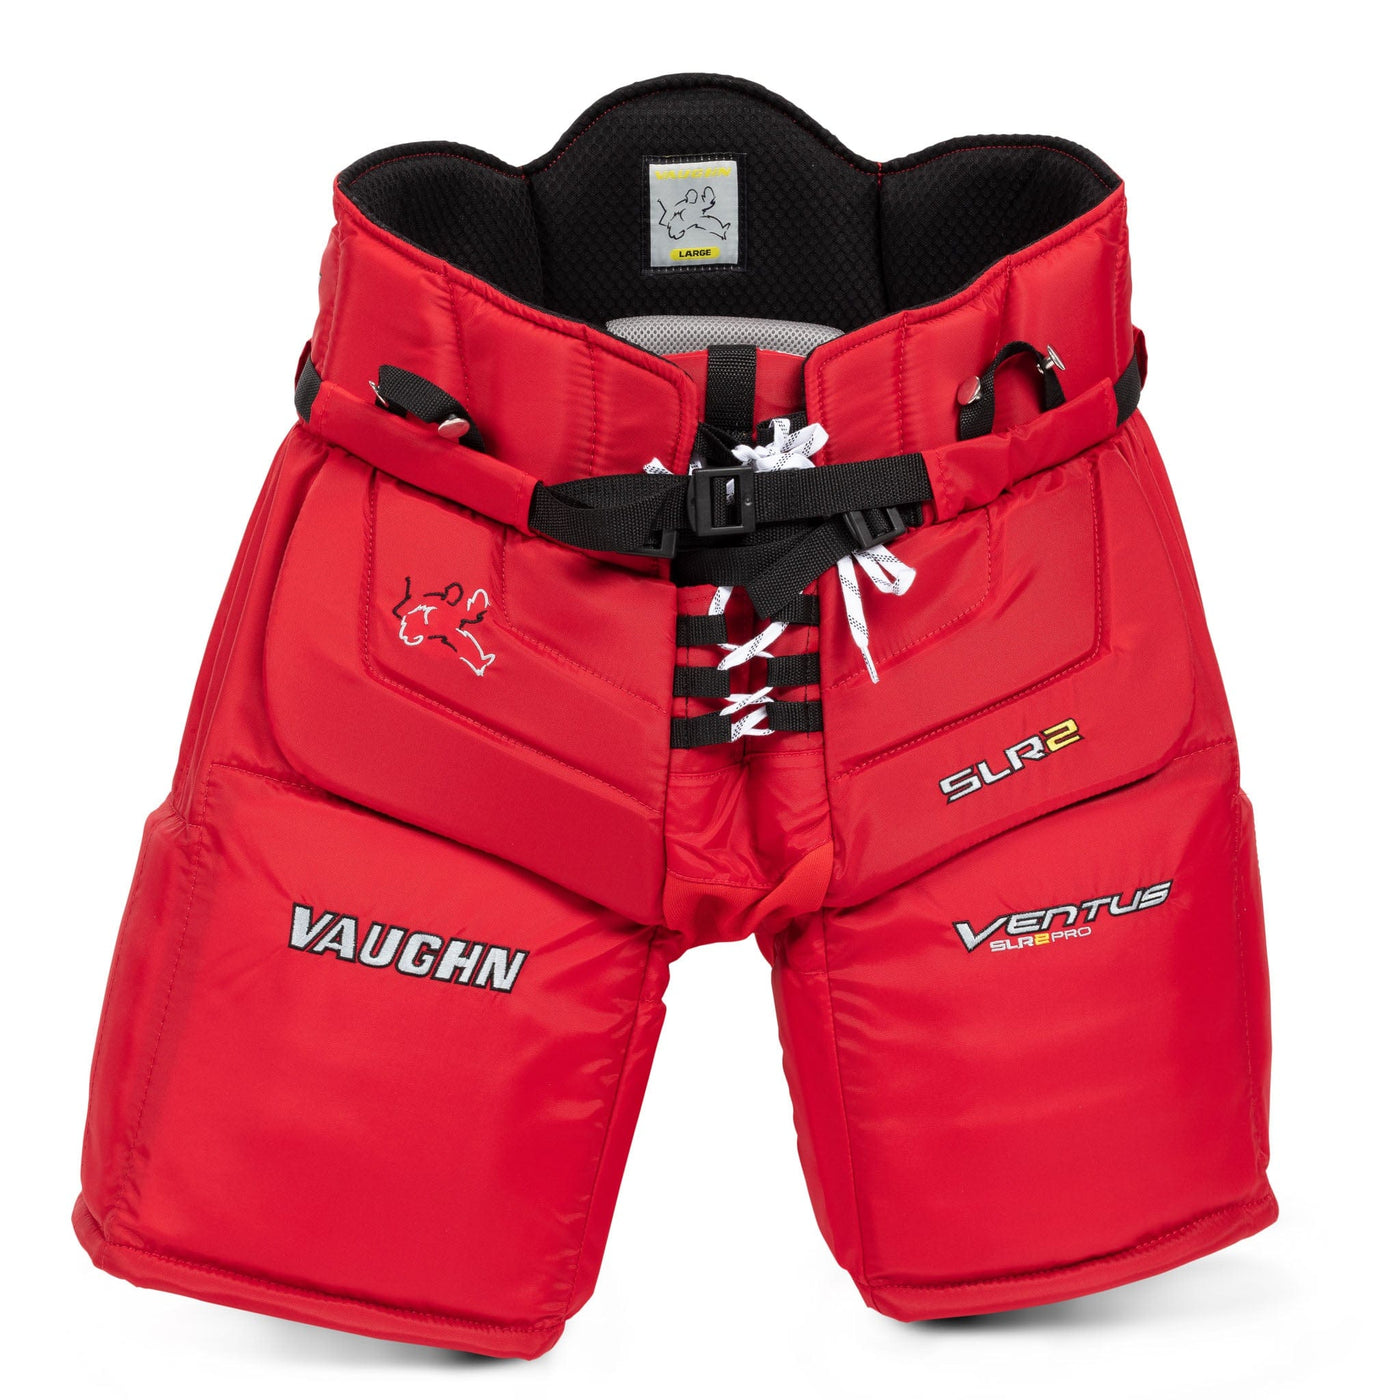 Vaughn Ventus SLR2 Pro Senior Goalie Pants